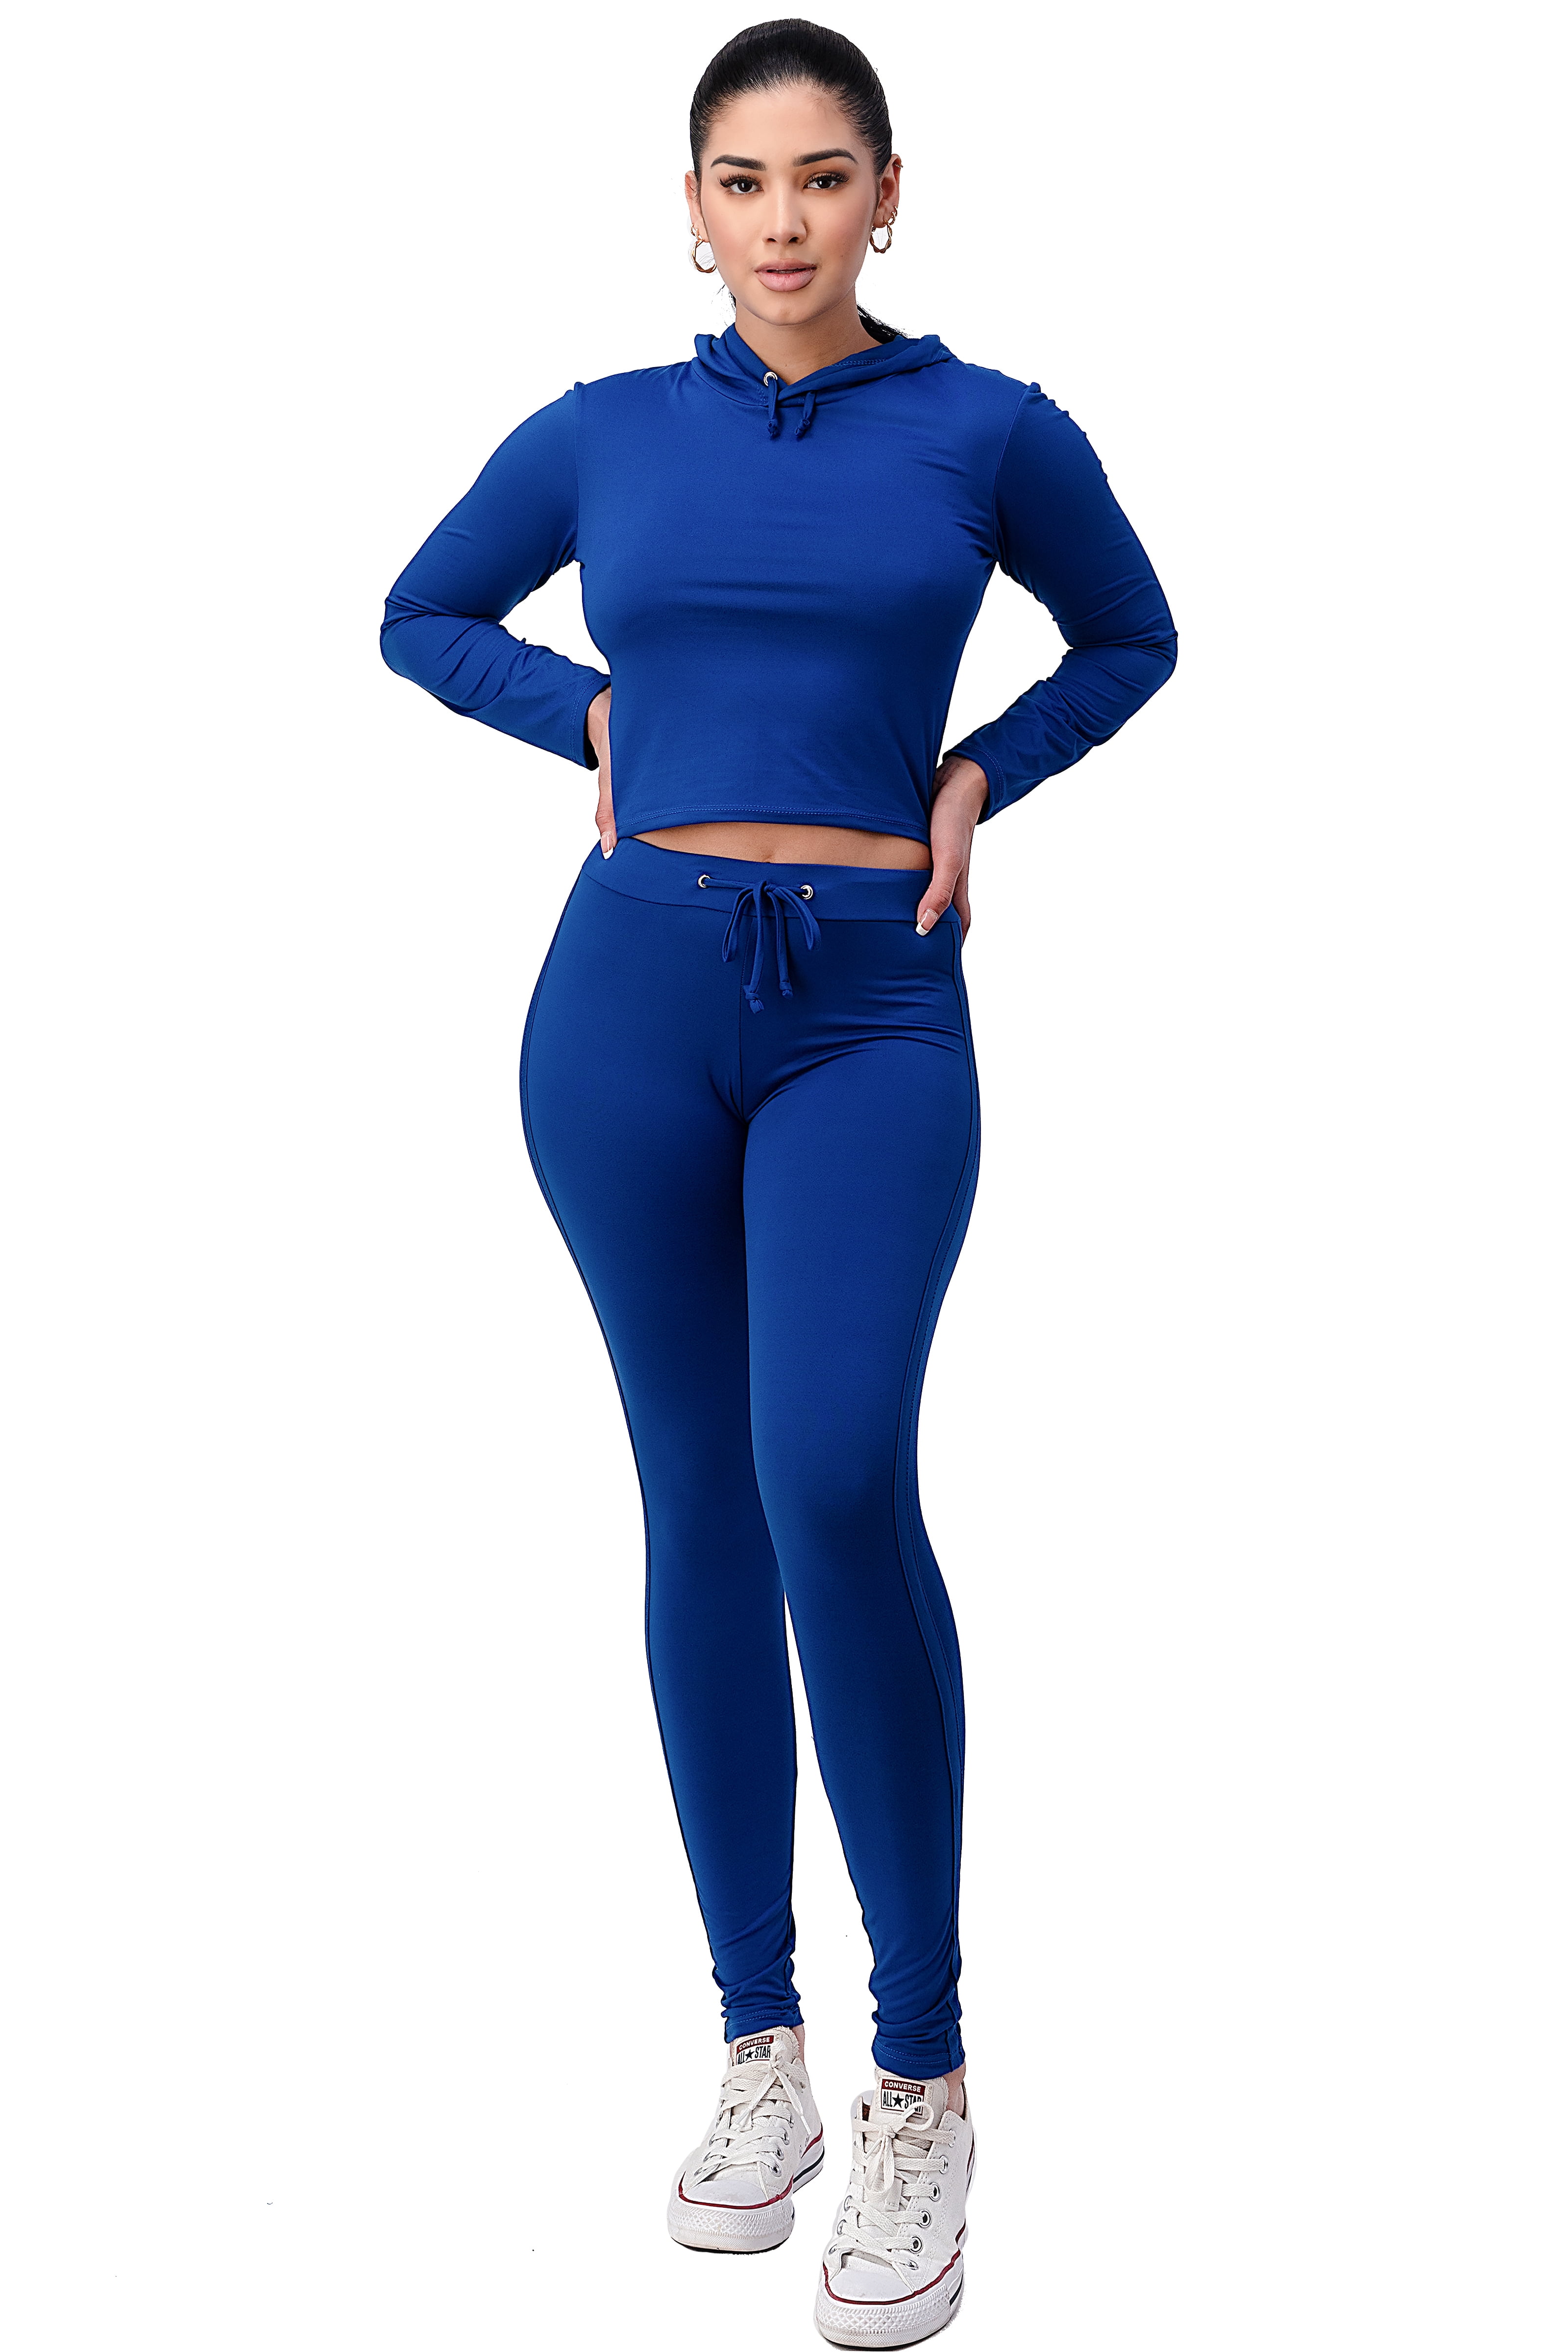 INNERSY High Waisted Leggings for Women Compression Yoga Pants Tummy  Control Workout Leggings (L, Royal Blue) - Walmart.com